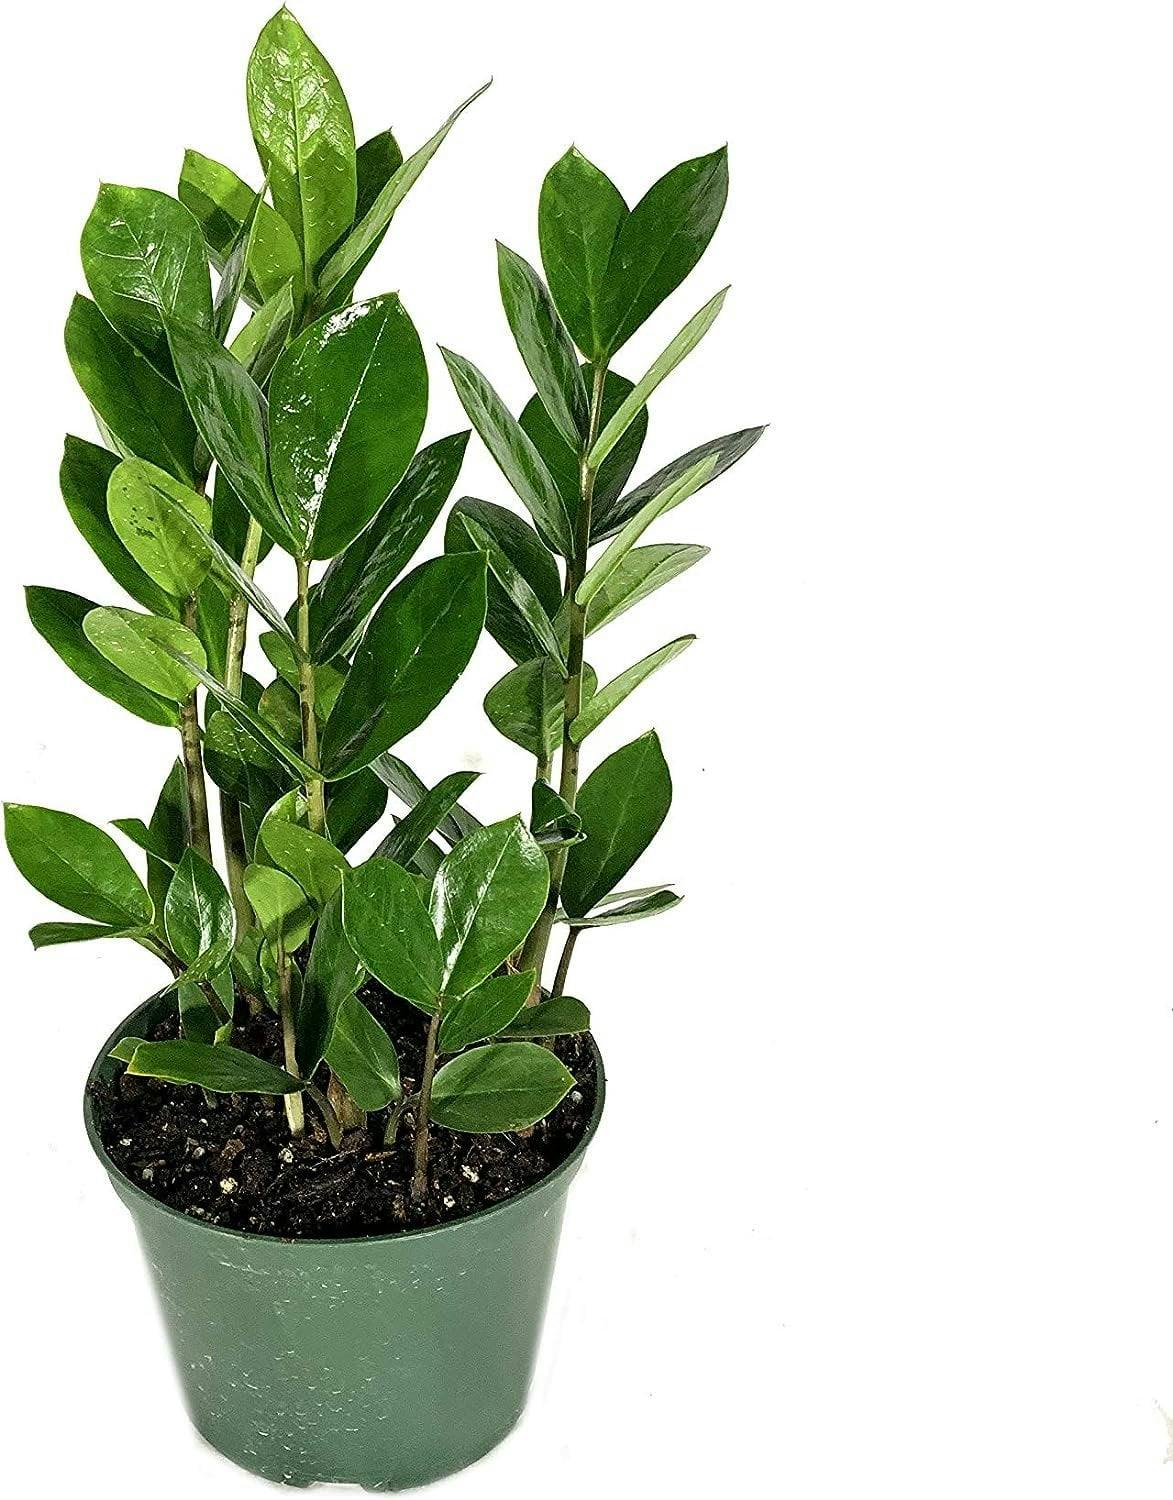 Zamioculcas Zamiifolia 6" Pot - Easy-Care Indoor Air Purifier